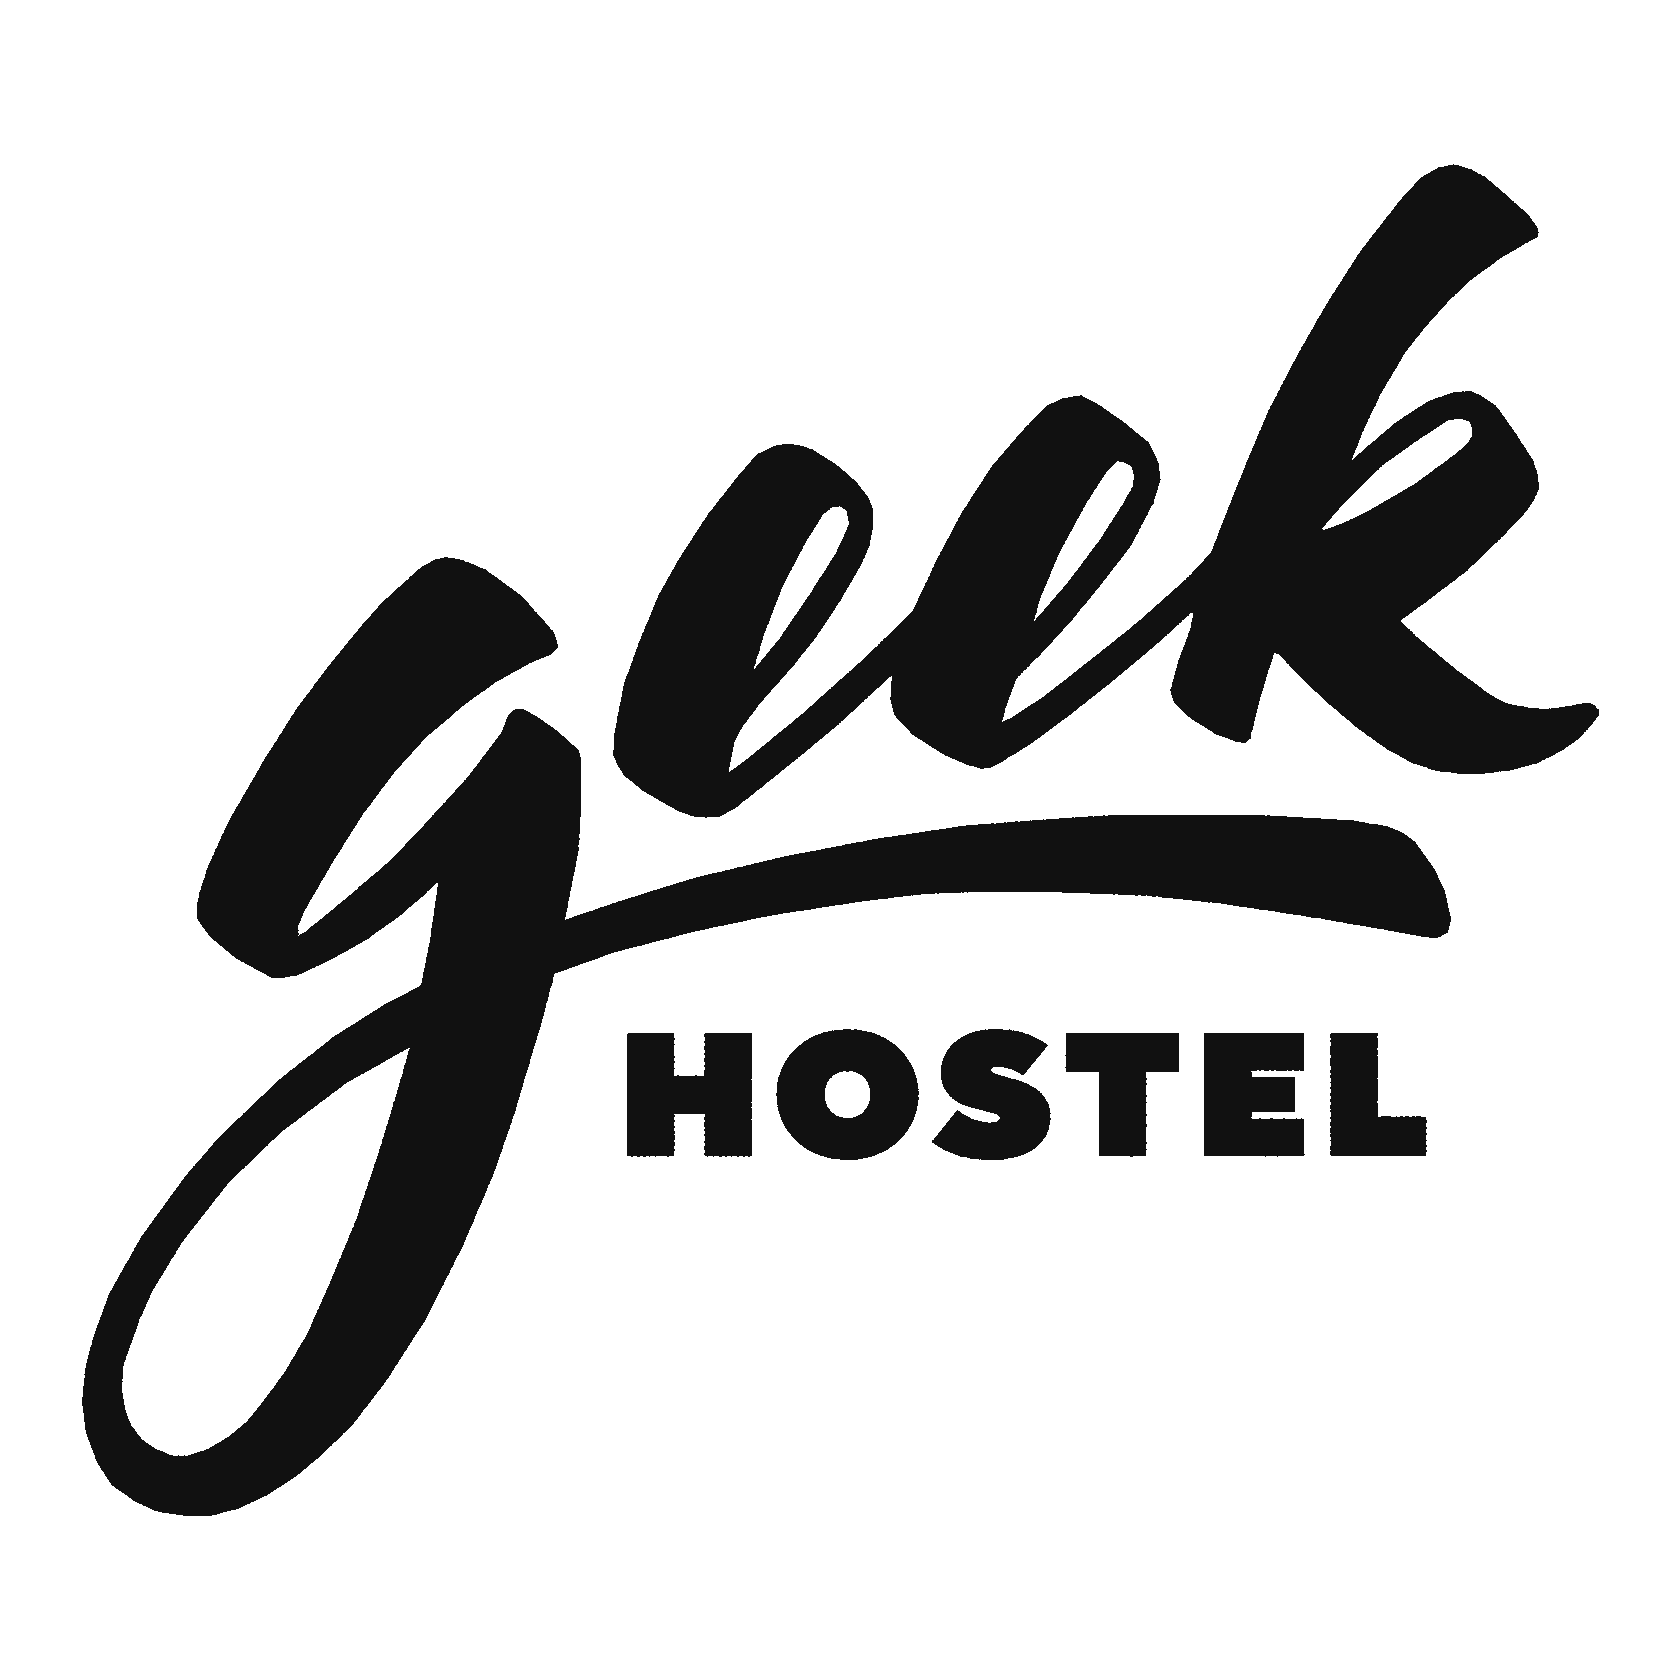 Geek Hostel